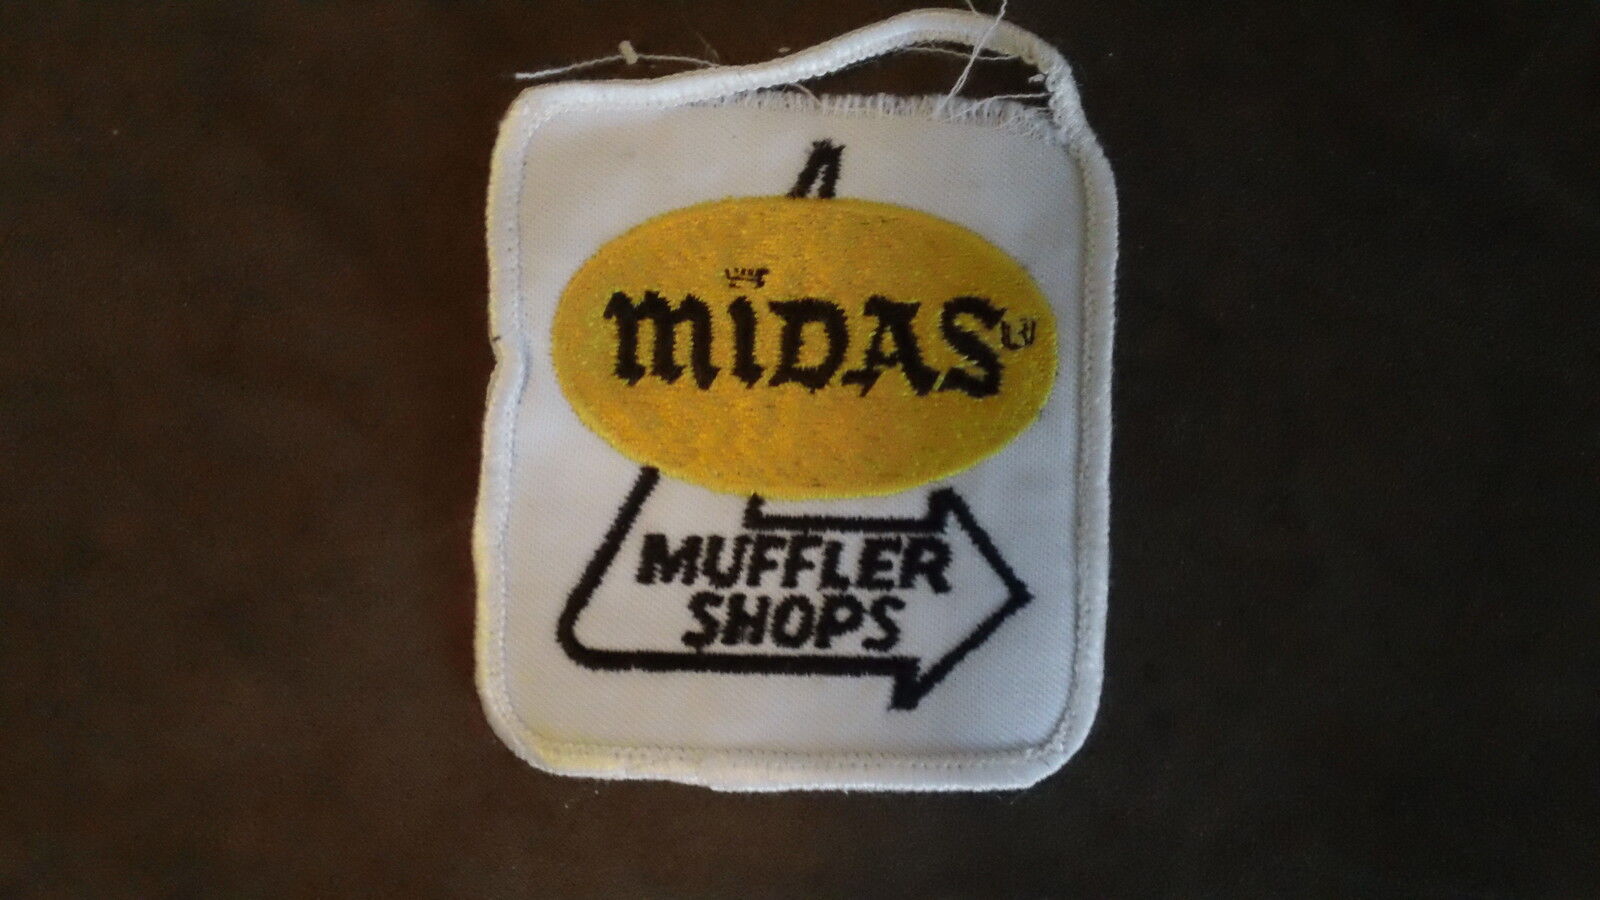 Midas Muffler Shops Embroidered Patch Applique Badge Brand Auto Repair Brakes 